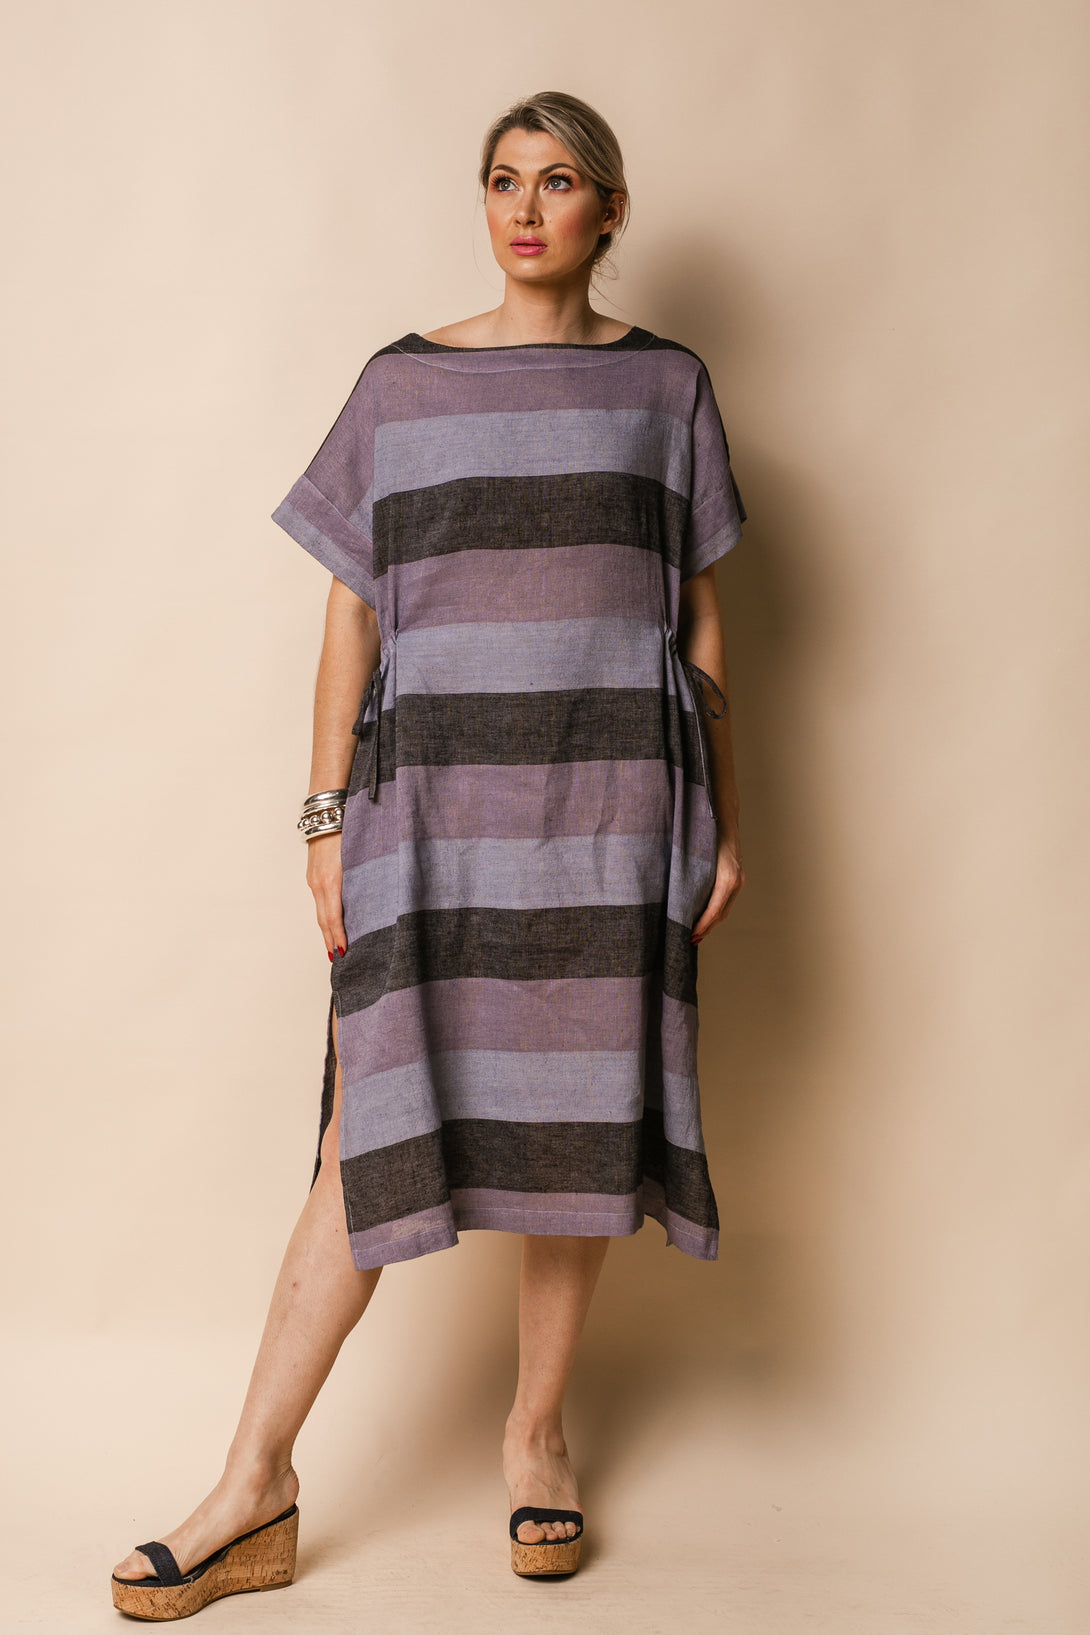 Moxie Linen Blend Dress in Granite - Imagine Fashion